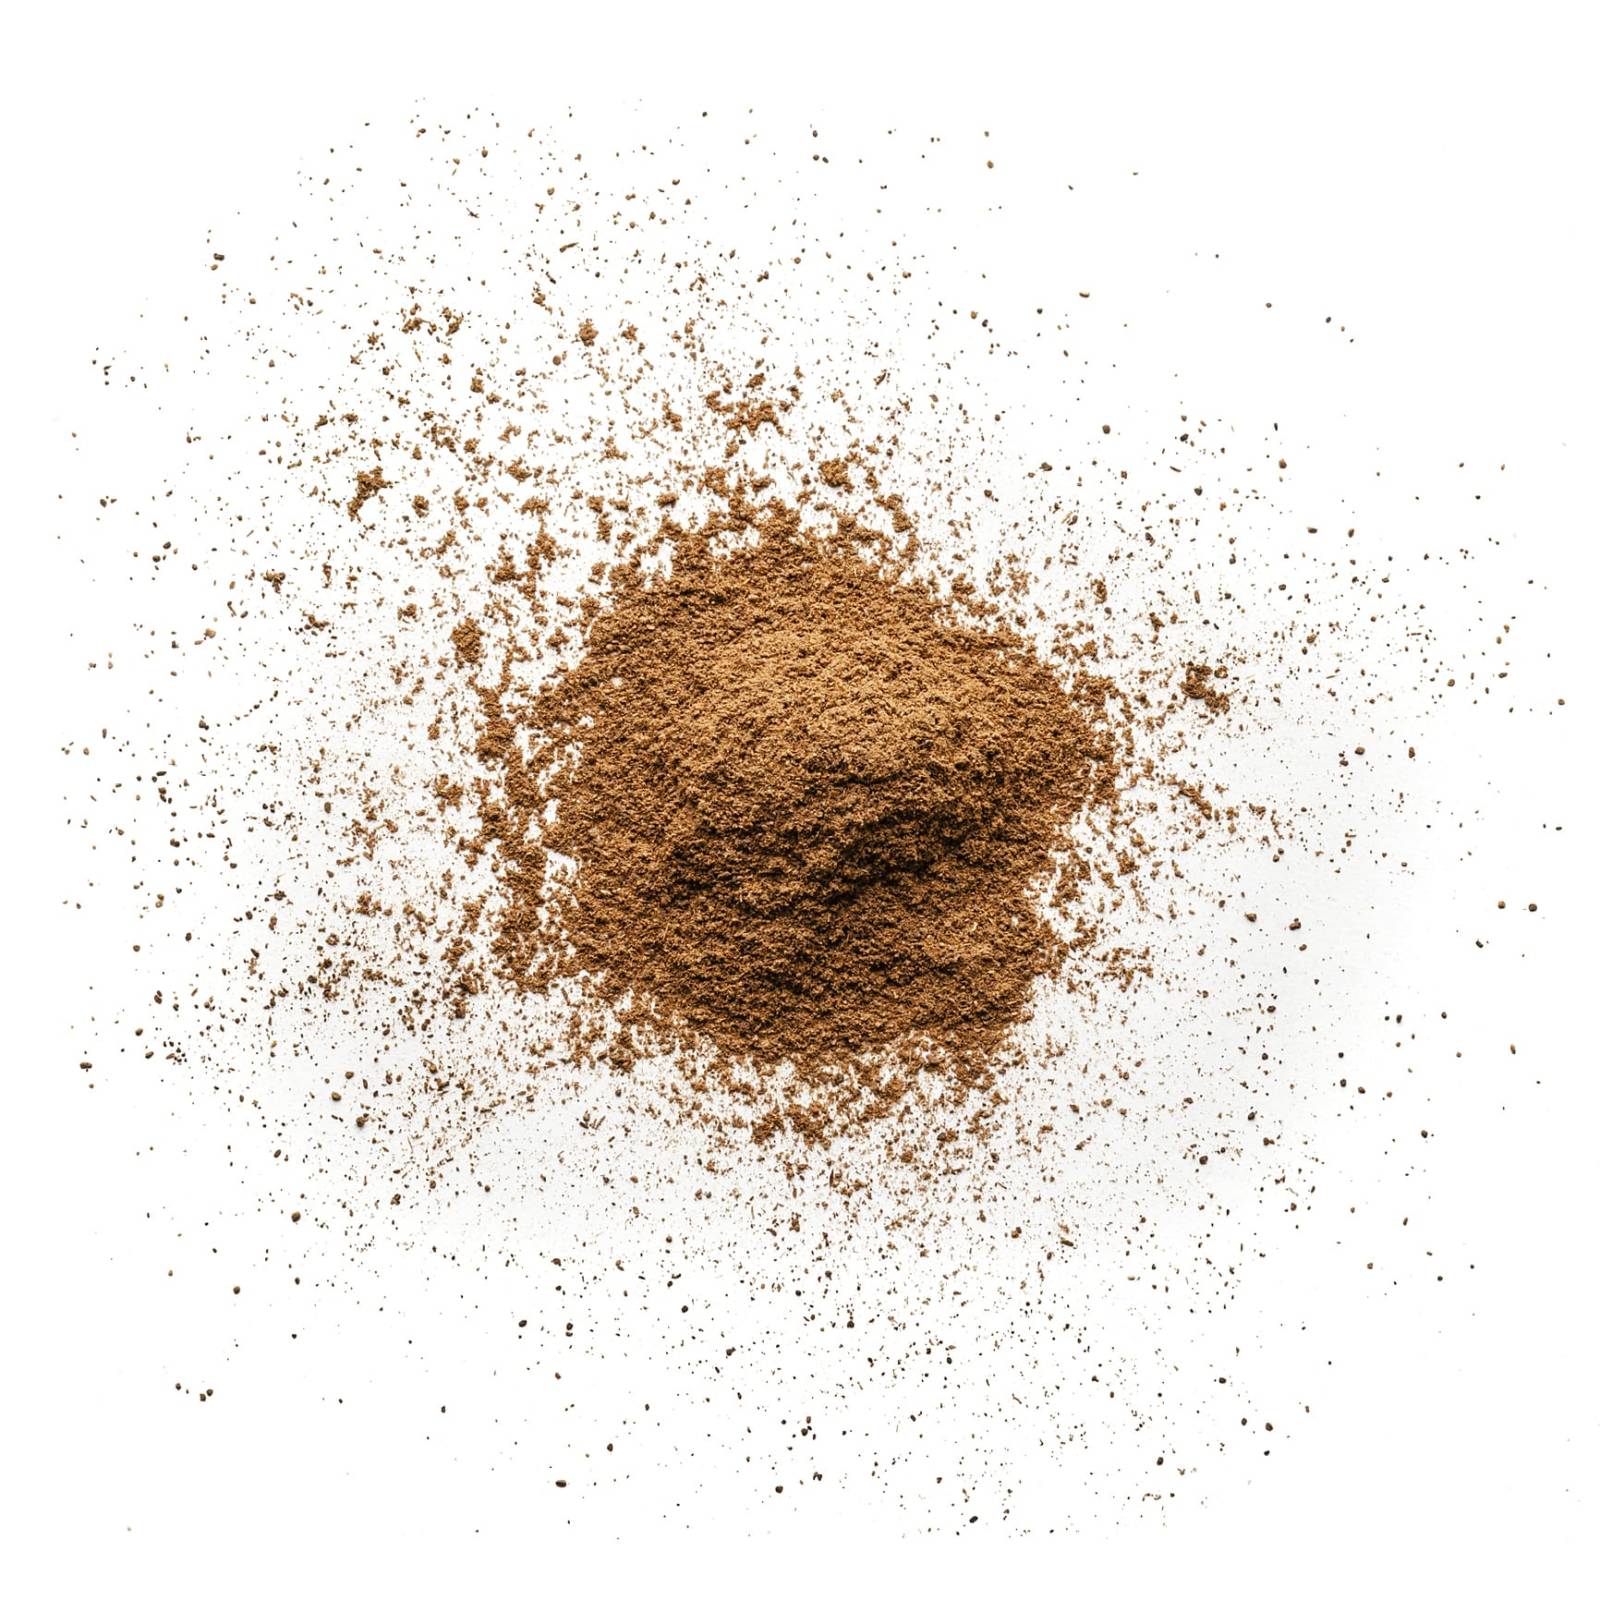 Cinnamon powder heap isolated on white background